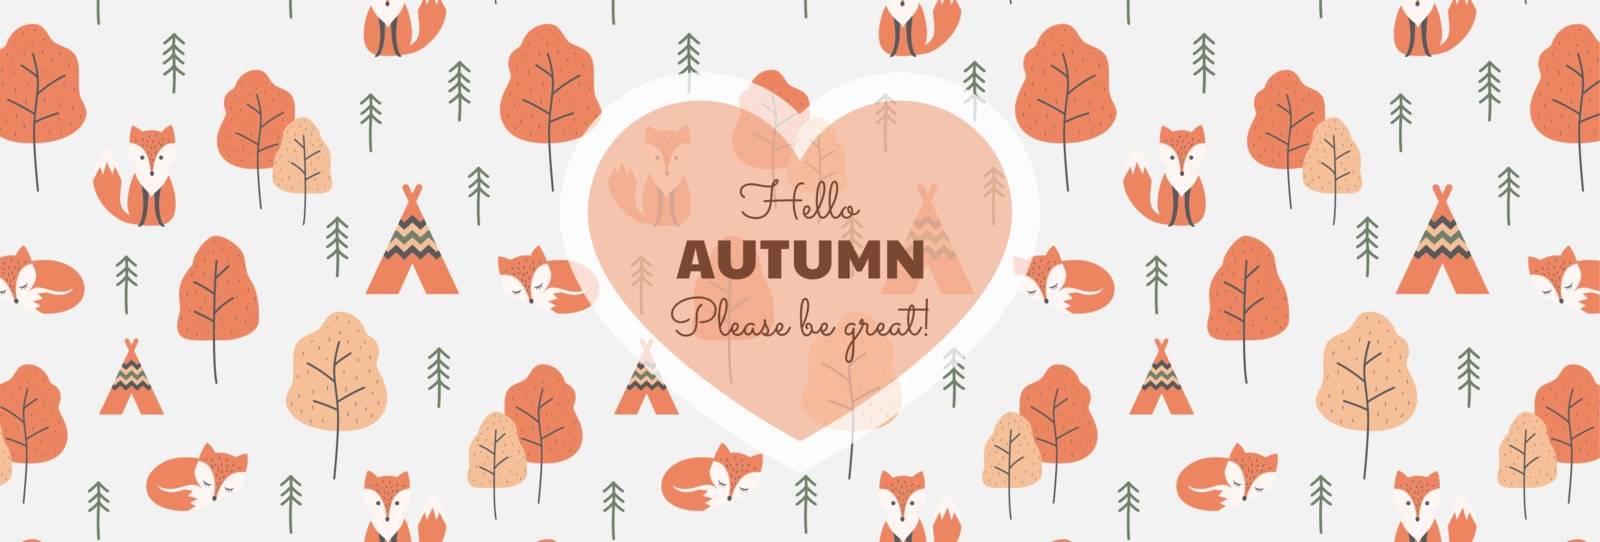 Hello autumn slogan banner, colorful pattern by cveivn